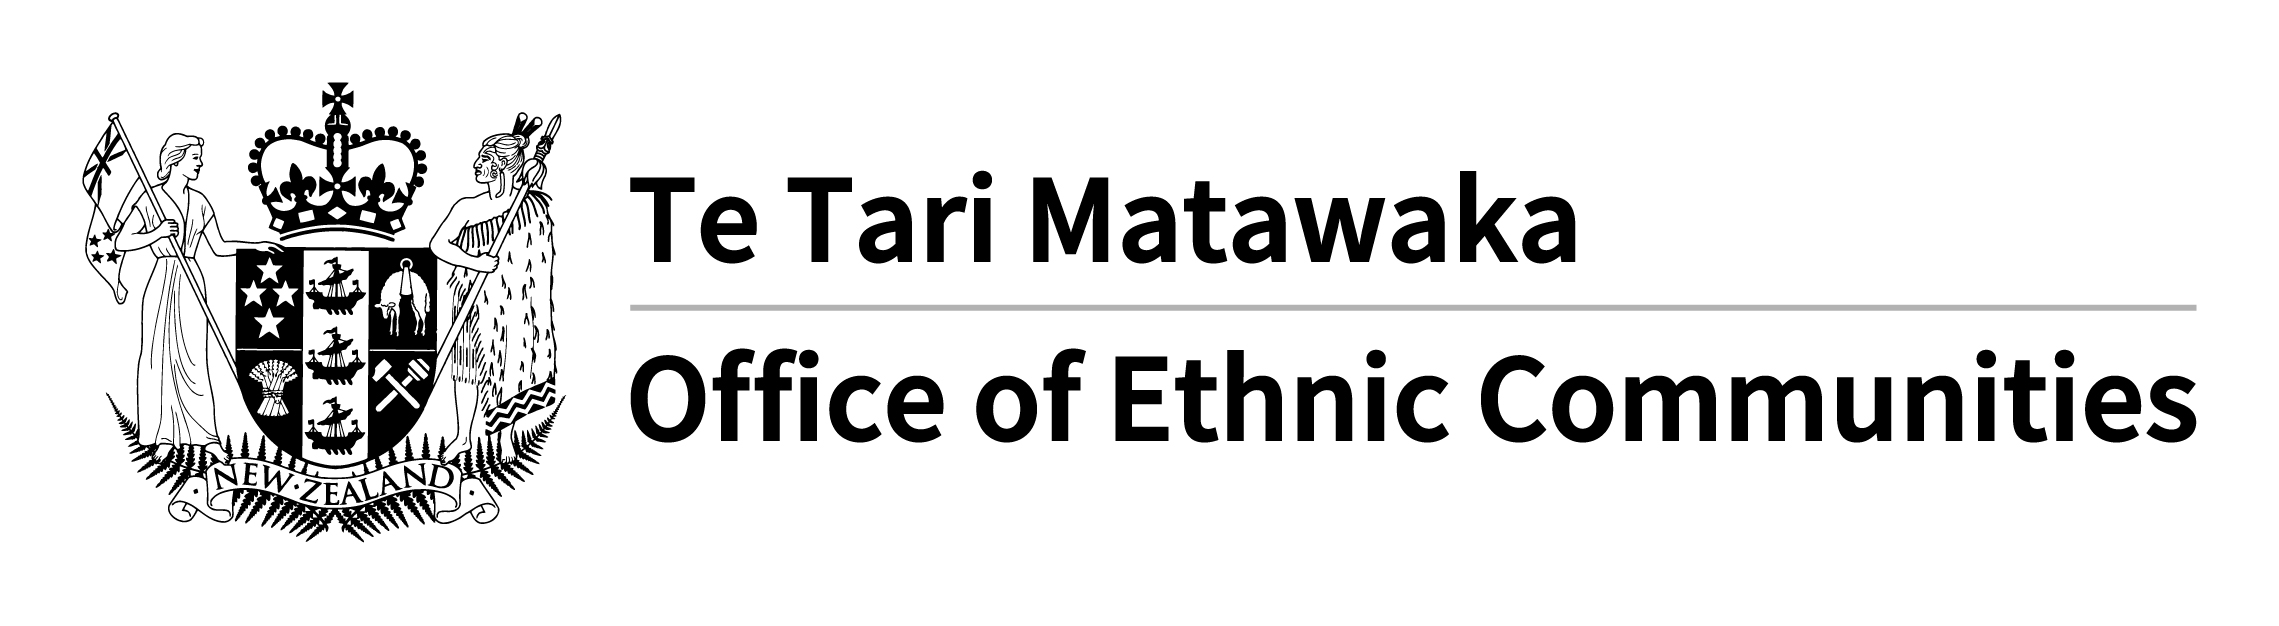 Office of Ethnic Communities Logo Black